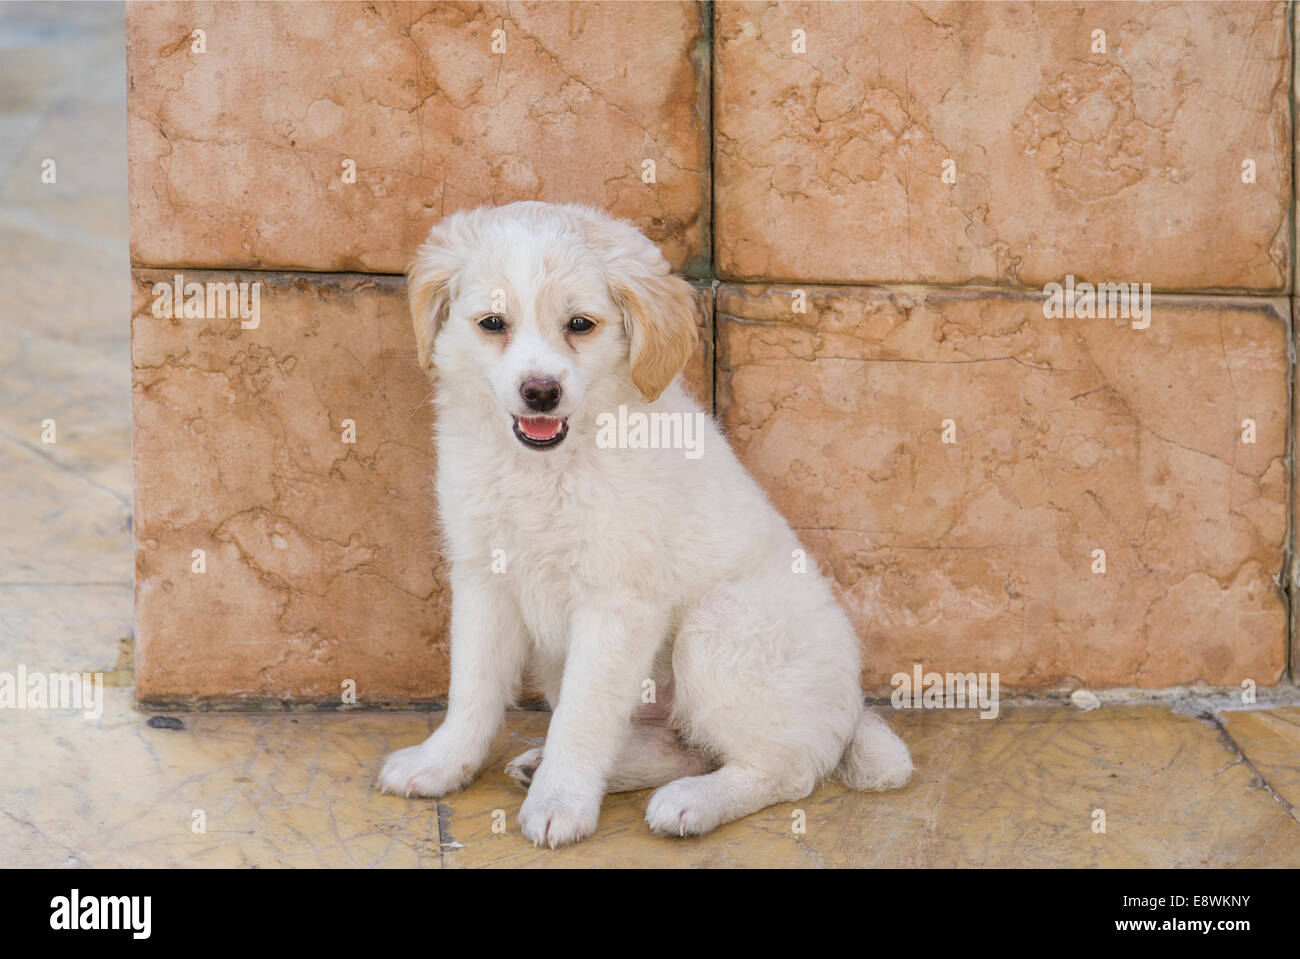 Puppy street dog Stock Photo